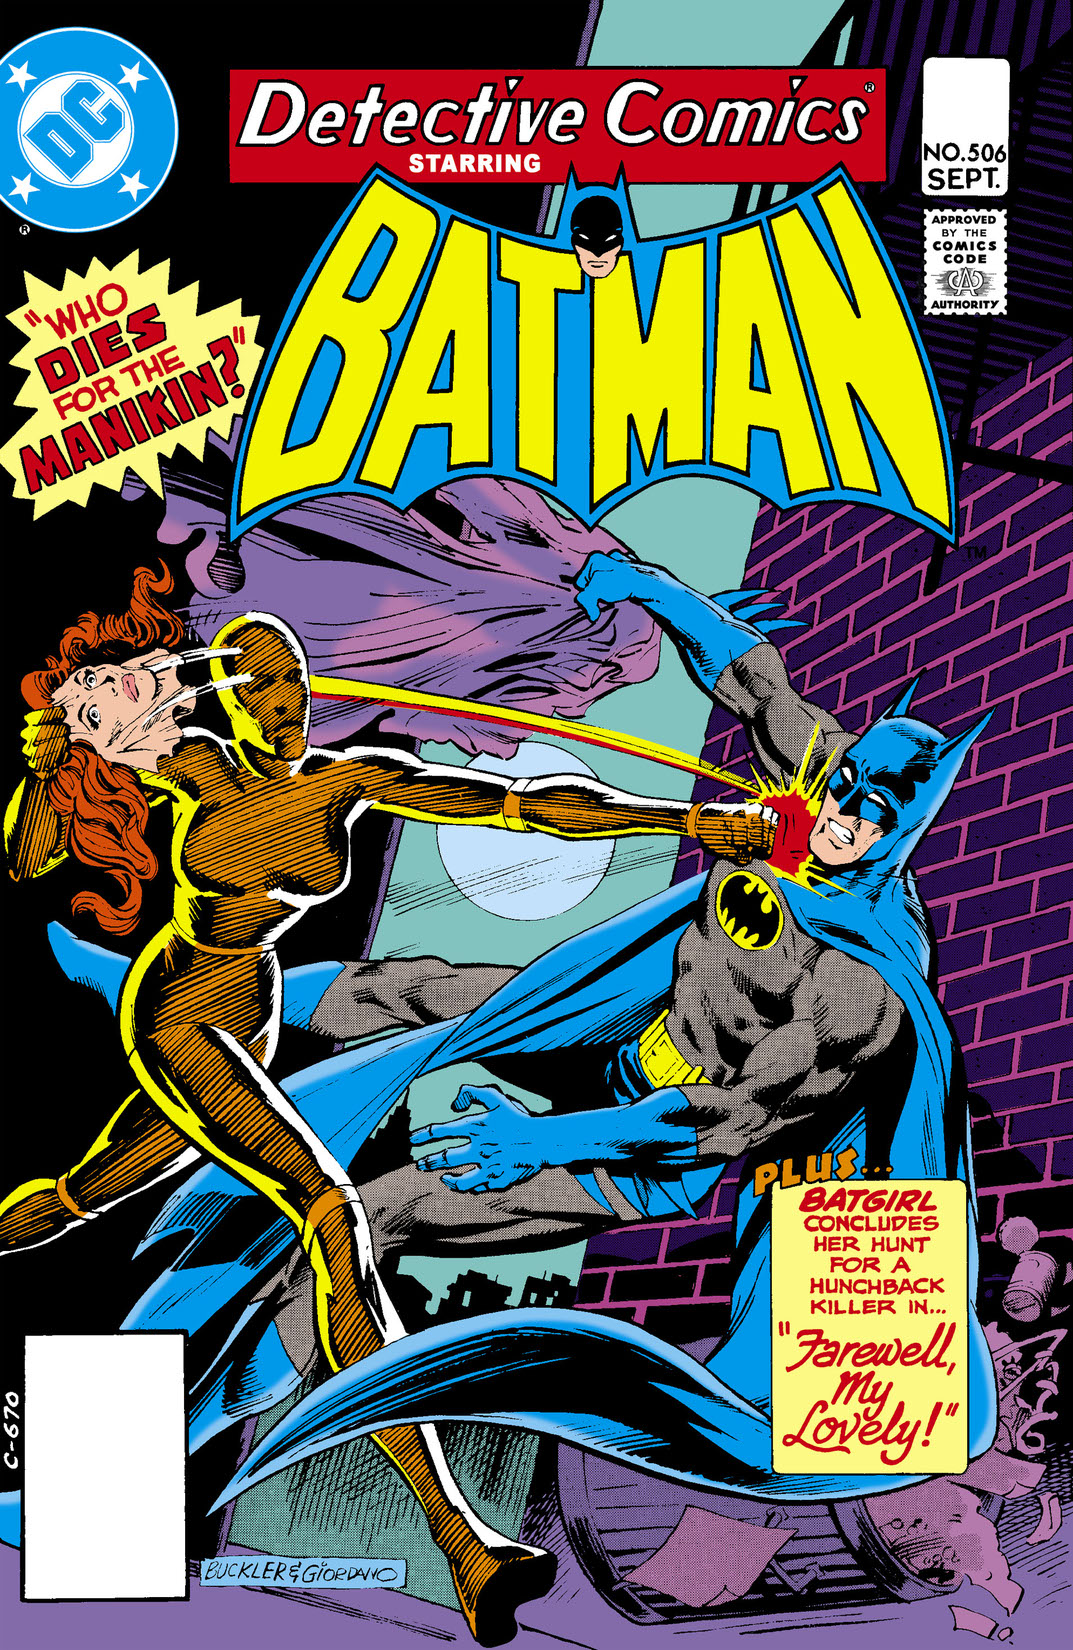 Detective Comics (1937-) #506 preview images